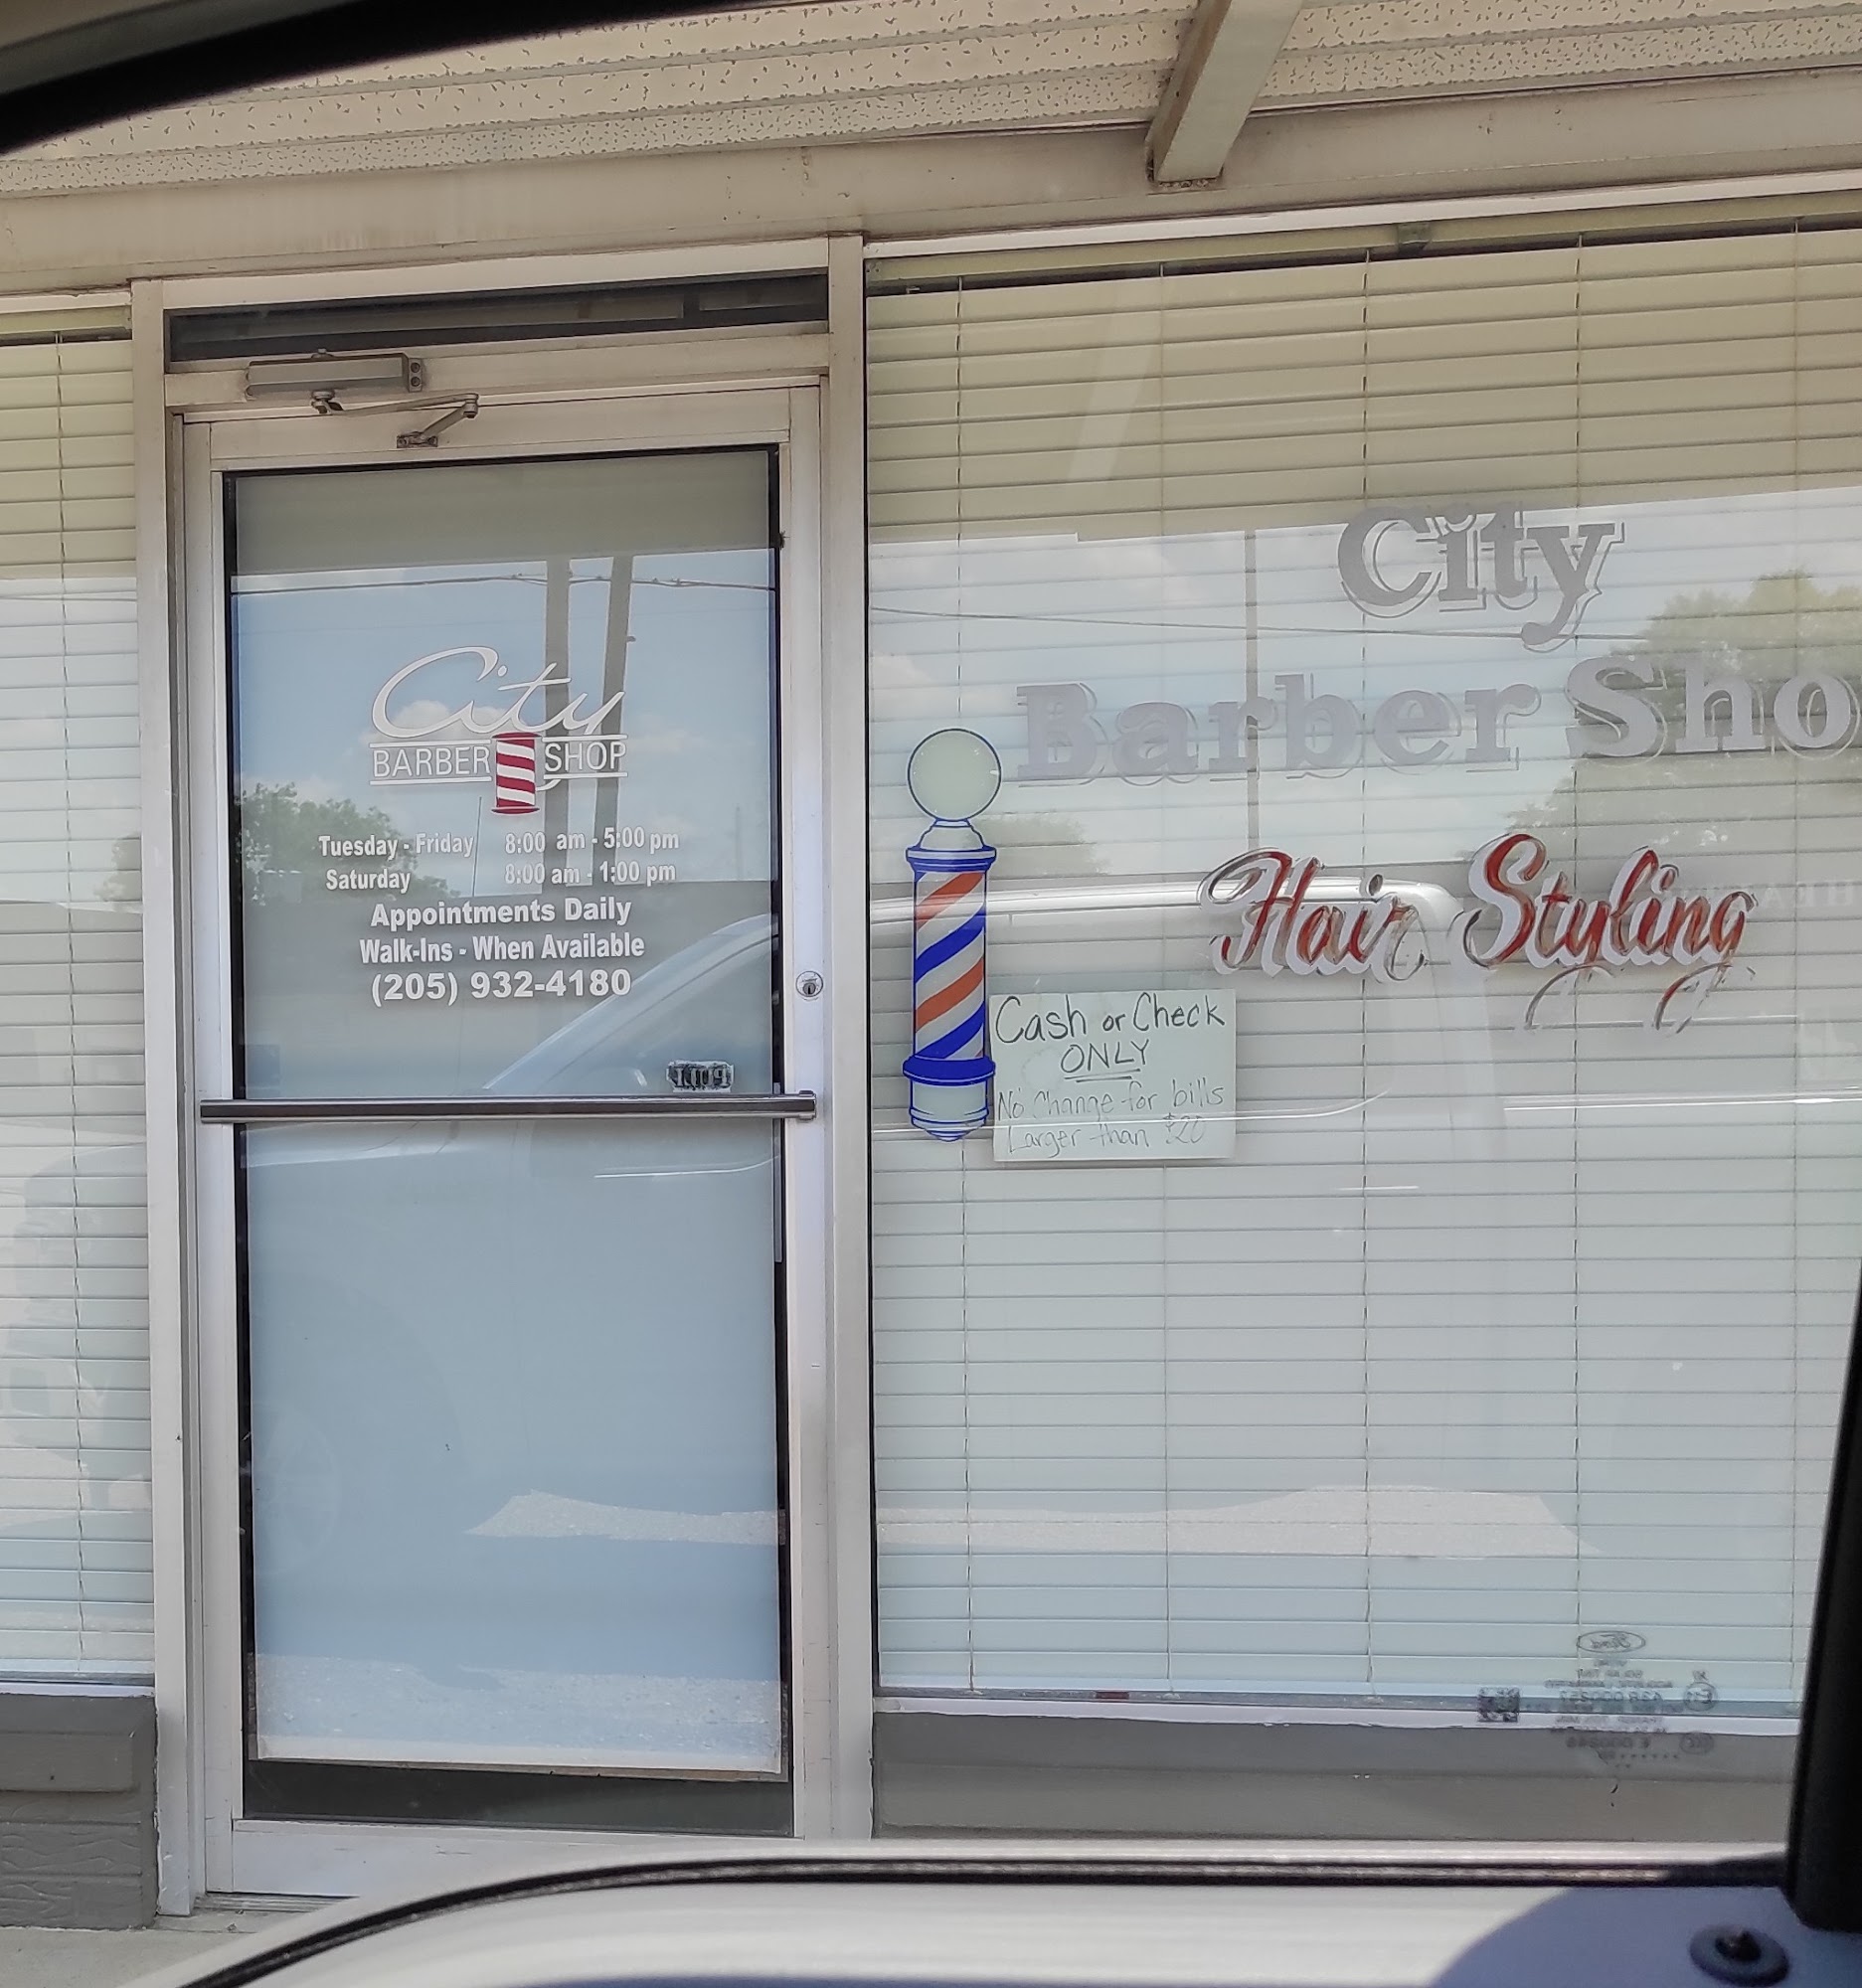 City Barber Shop 209 2nd St NW, Fayette Alabama 35555